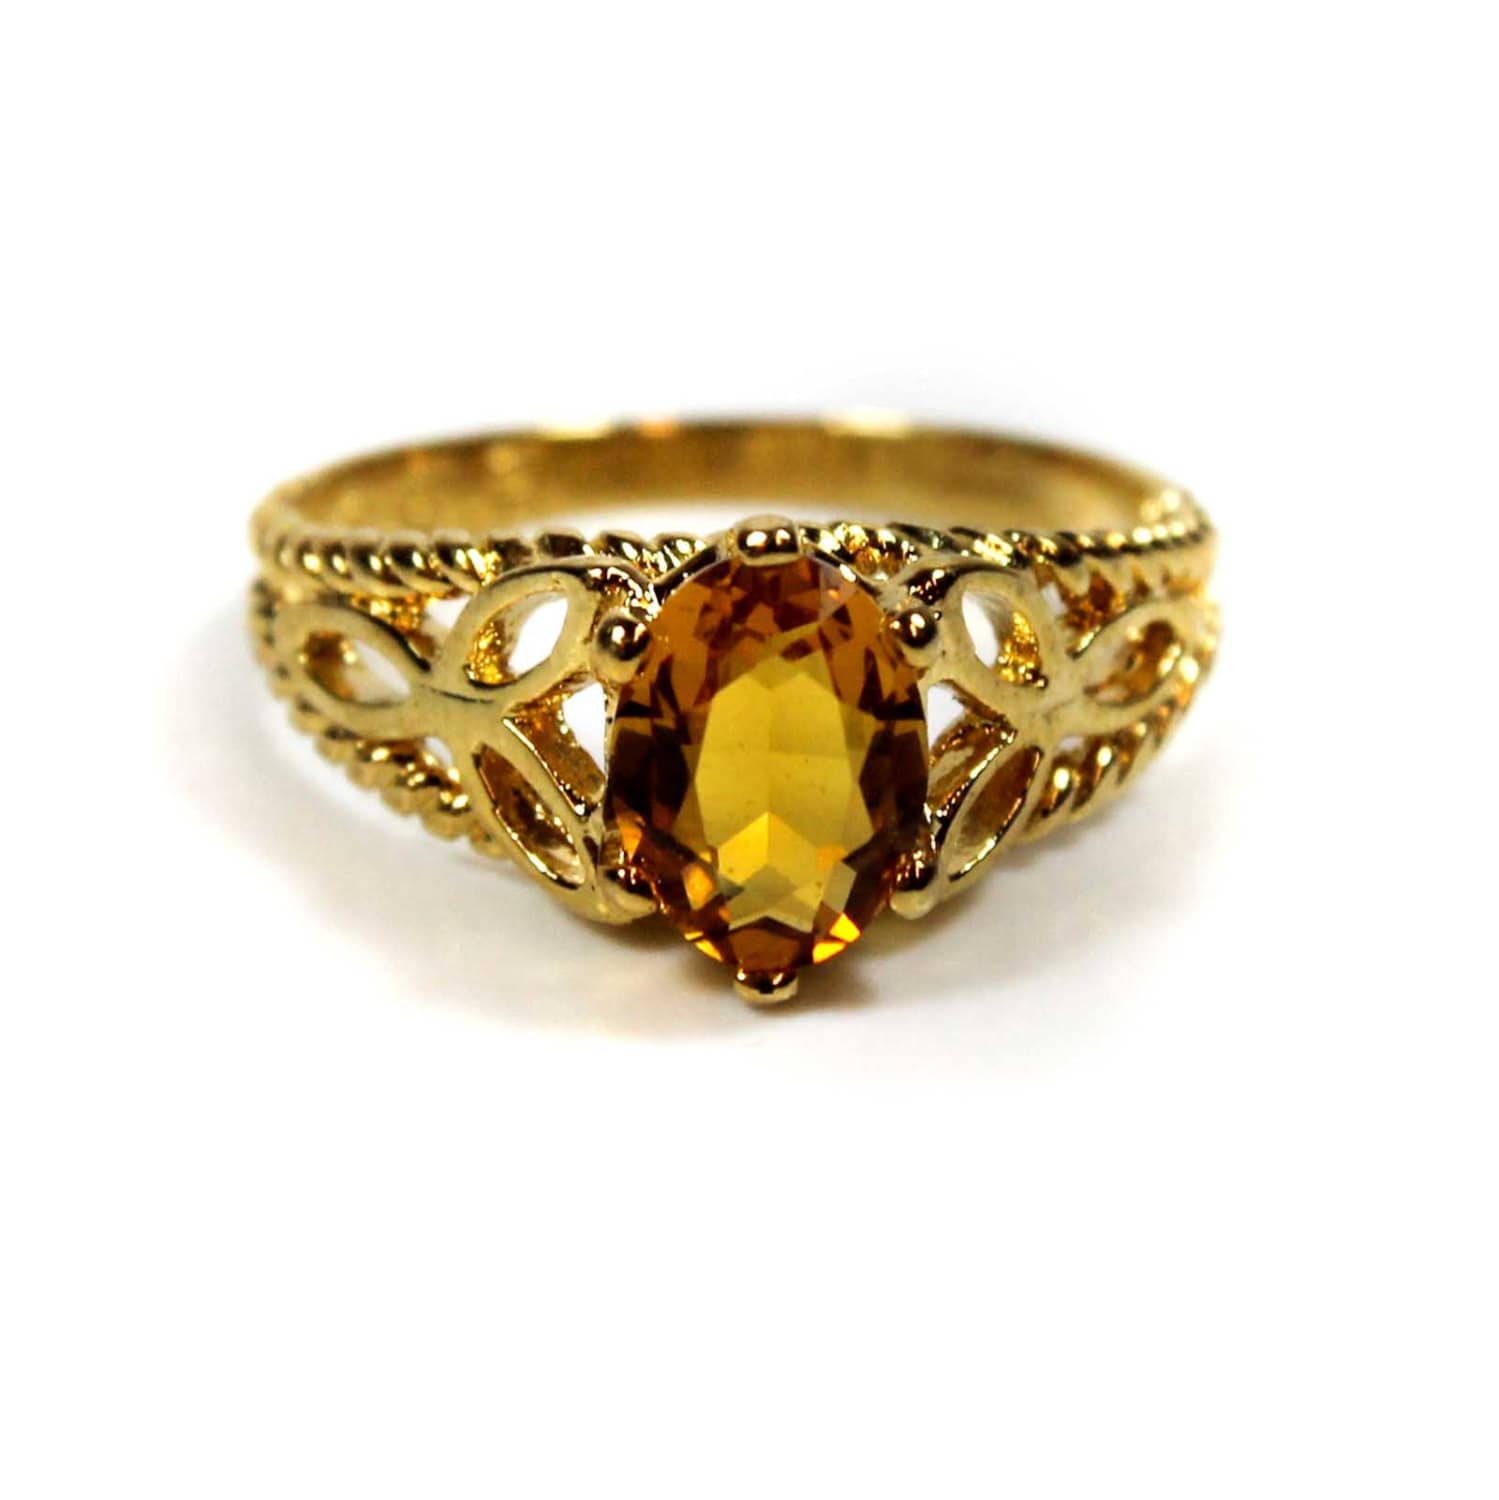 Vintage Brown Topaz Swarovski Crystal 18k Gold Filigree Antique Womans Cocktail Ring Made in USA #R300 - Limited Stock - Never Worn